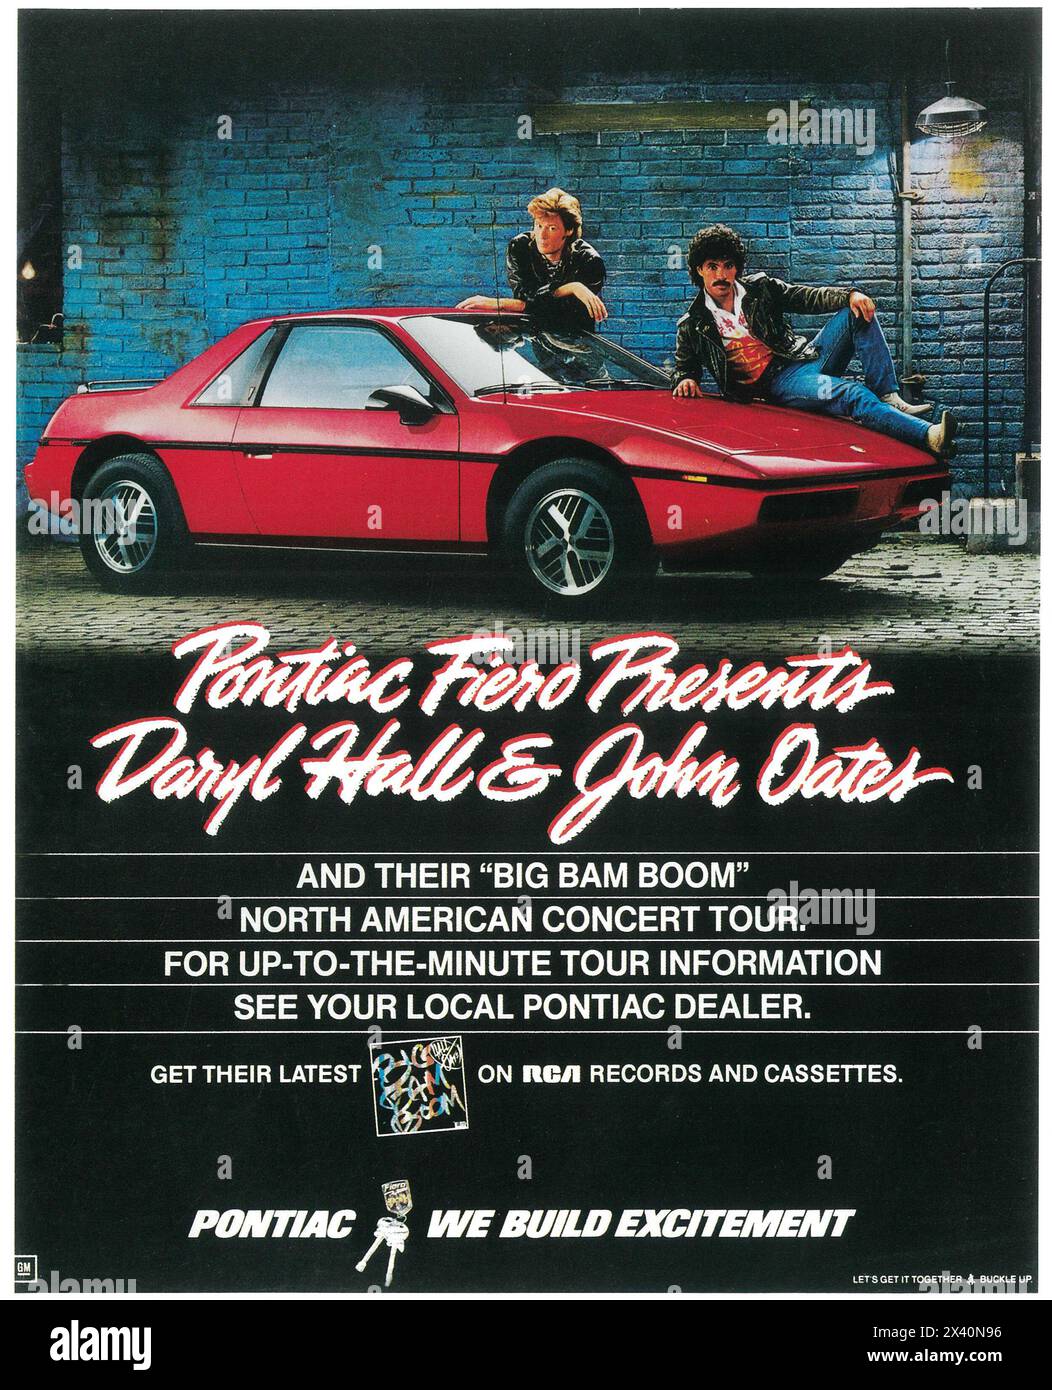 1984 Pontiac fiero ad - Hall and Oates con Big Bam Boom album tour Foto Stock